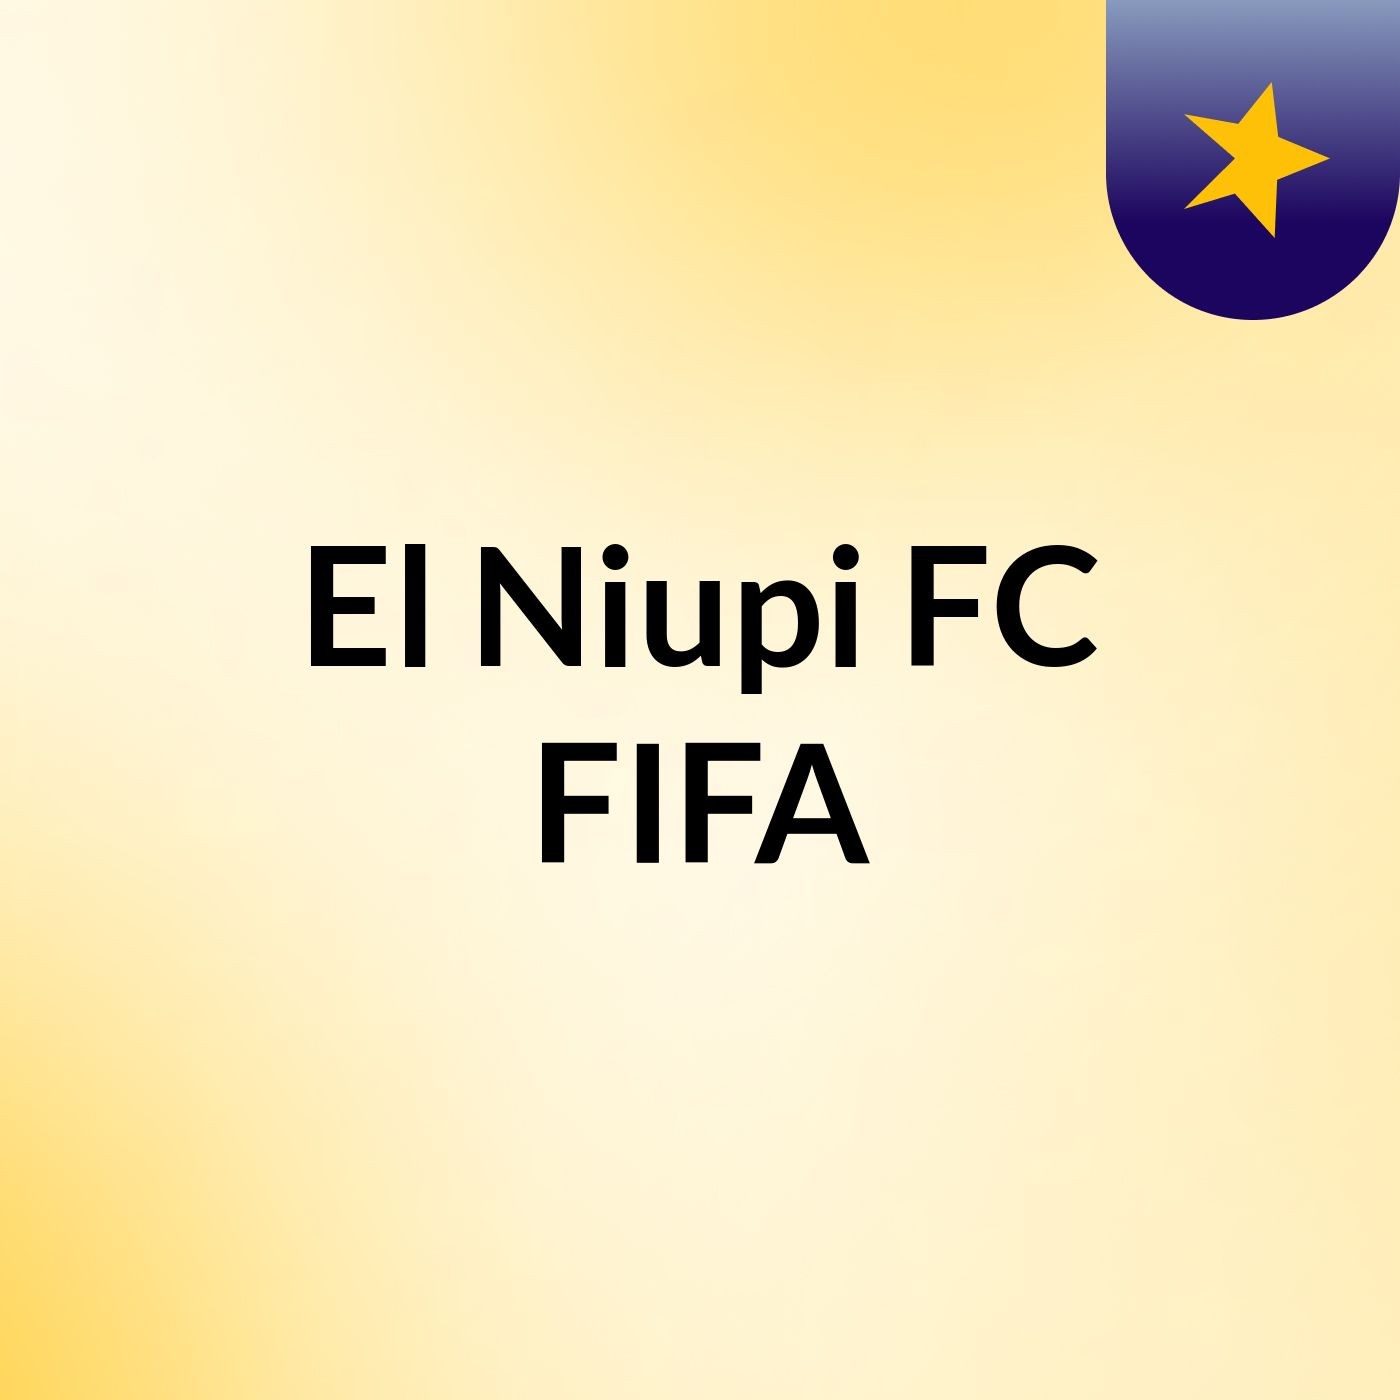 El Niupi FC FIFA